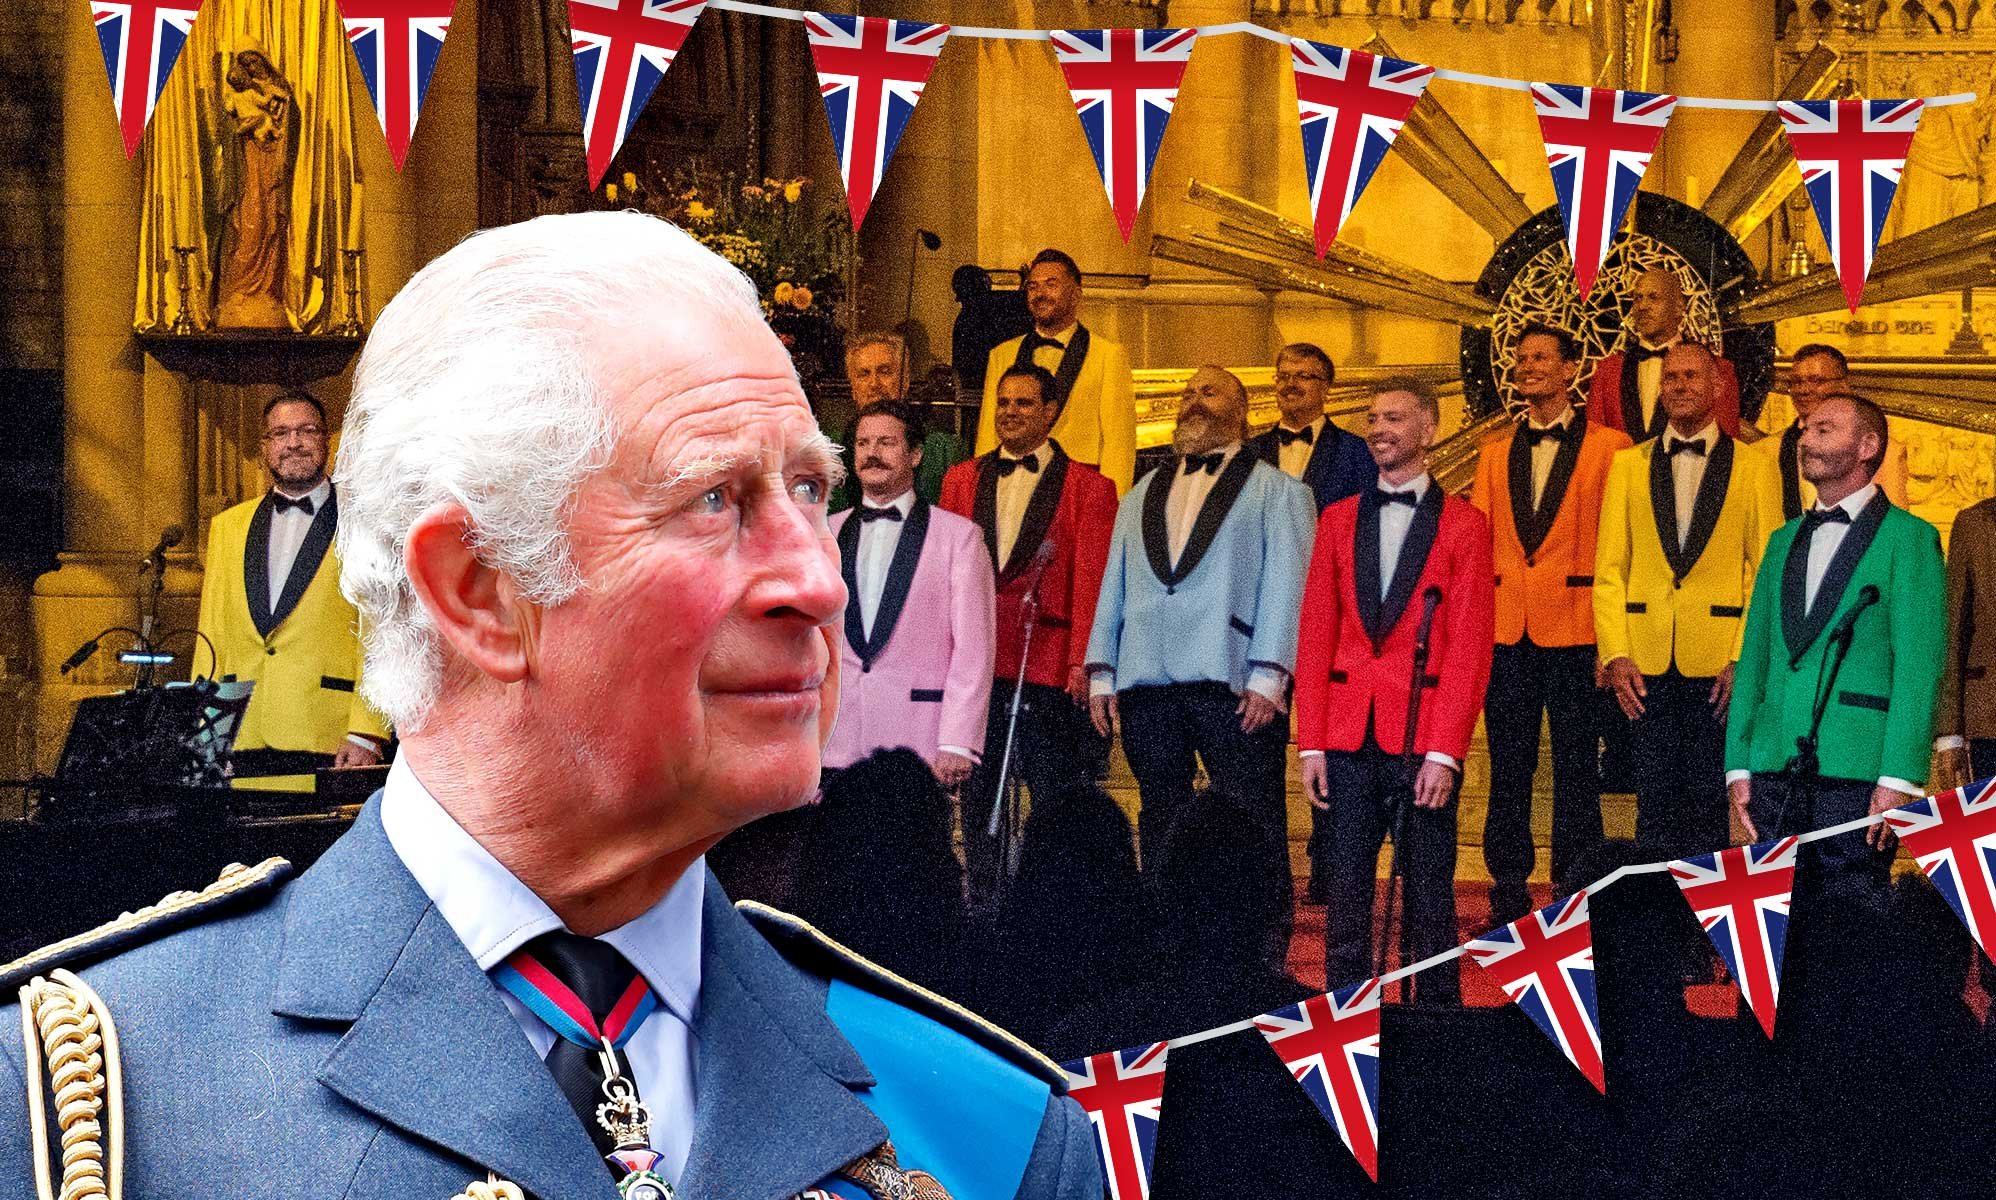 Brighton gay choir ‘honoured’ to represent LGBTQ+ community at King’s coronation concert